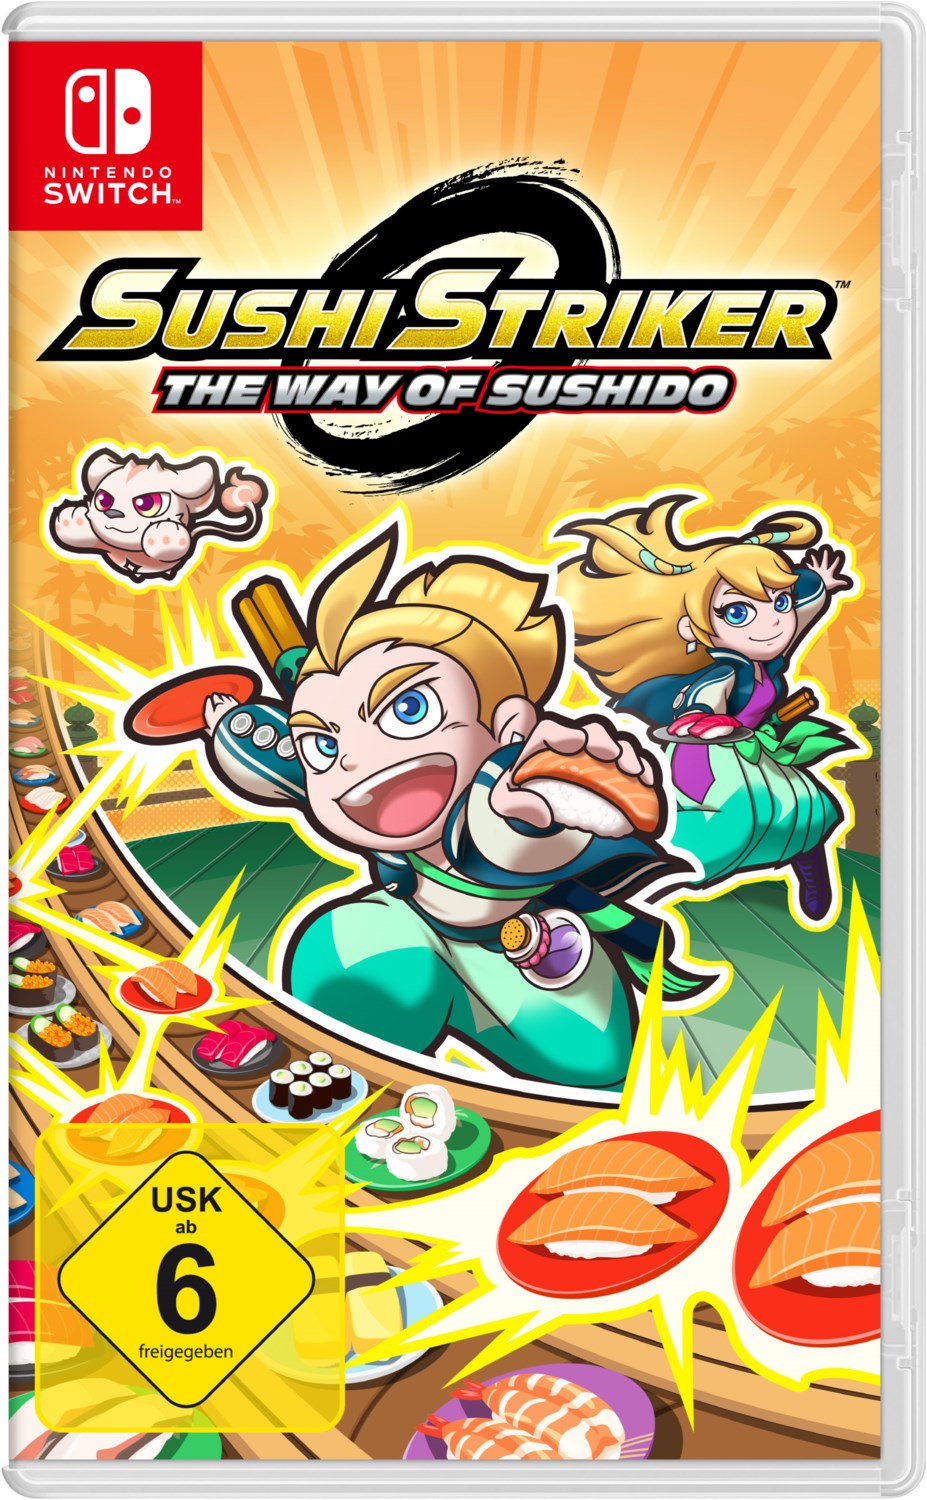 Nintendo Sushi Striker: The Way of Sushido